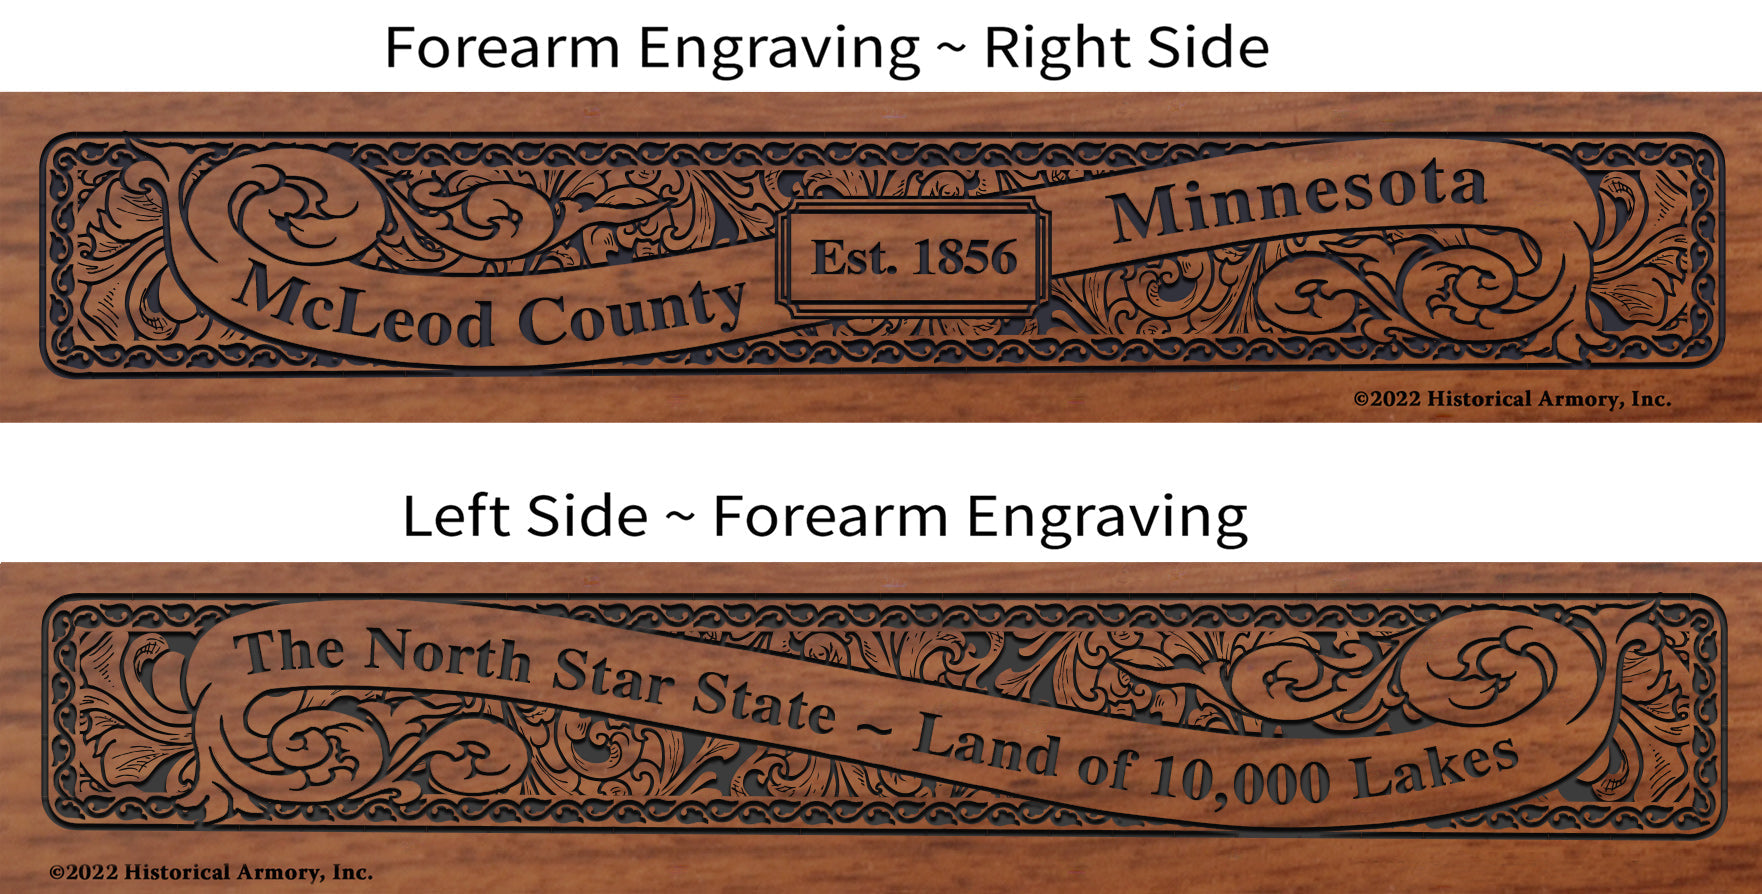 McLeod County Minnesota Engraved Rifle Forearm